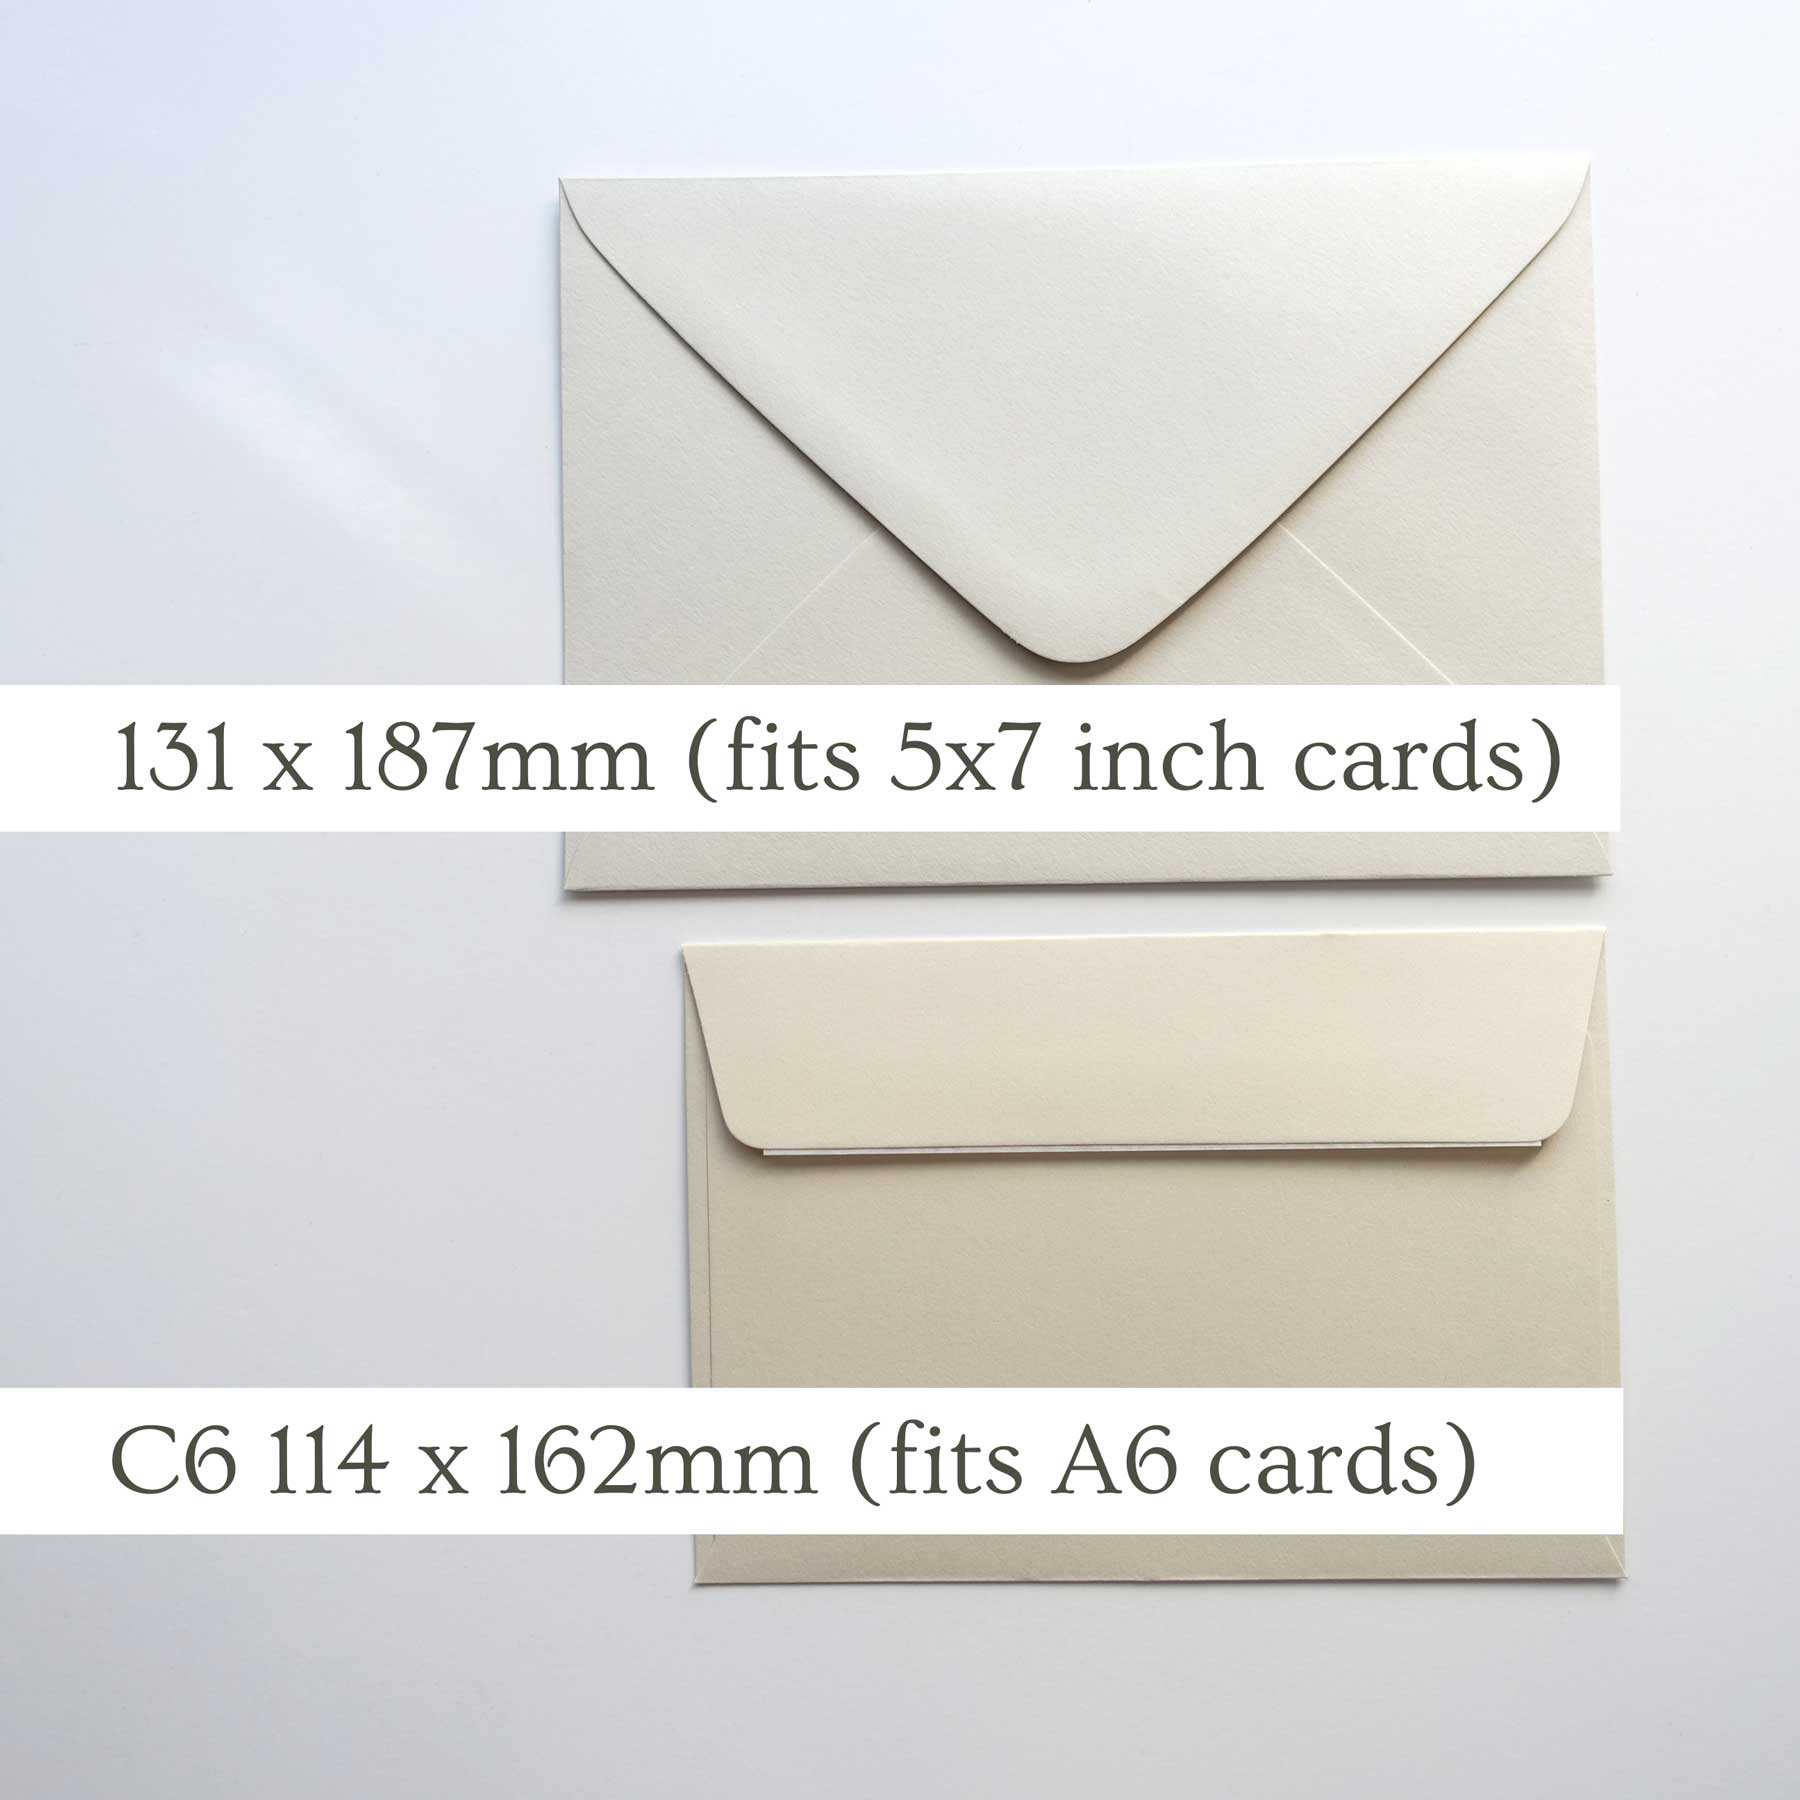 Assorted C6 envelopes greens & earthy tones